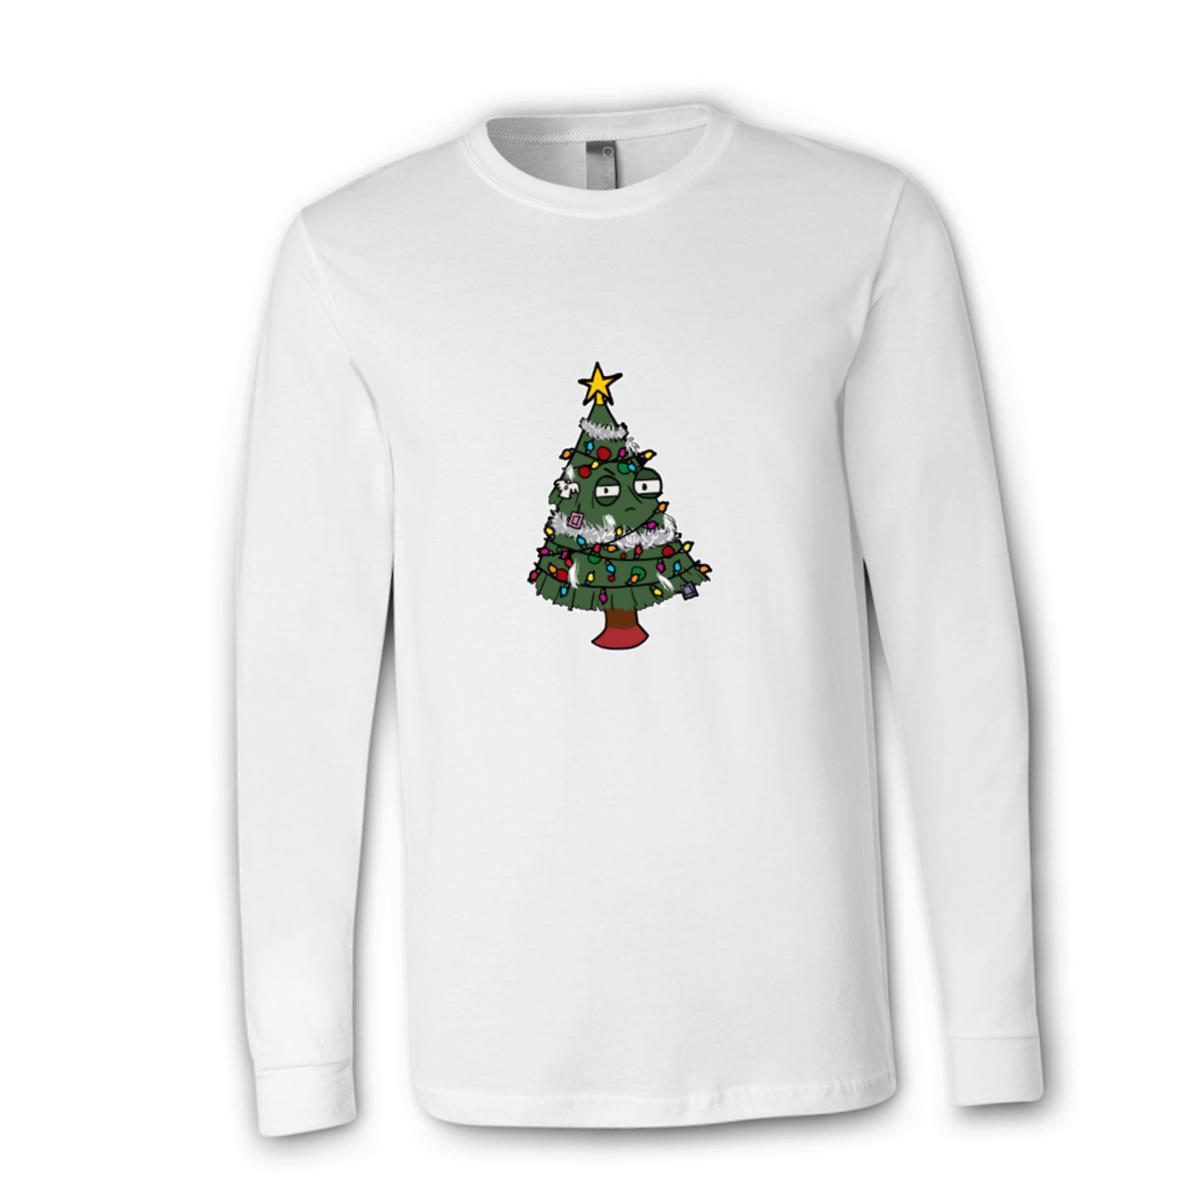 Gaudy Christmas Tree Unisex Long Sleeve Tee Small white